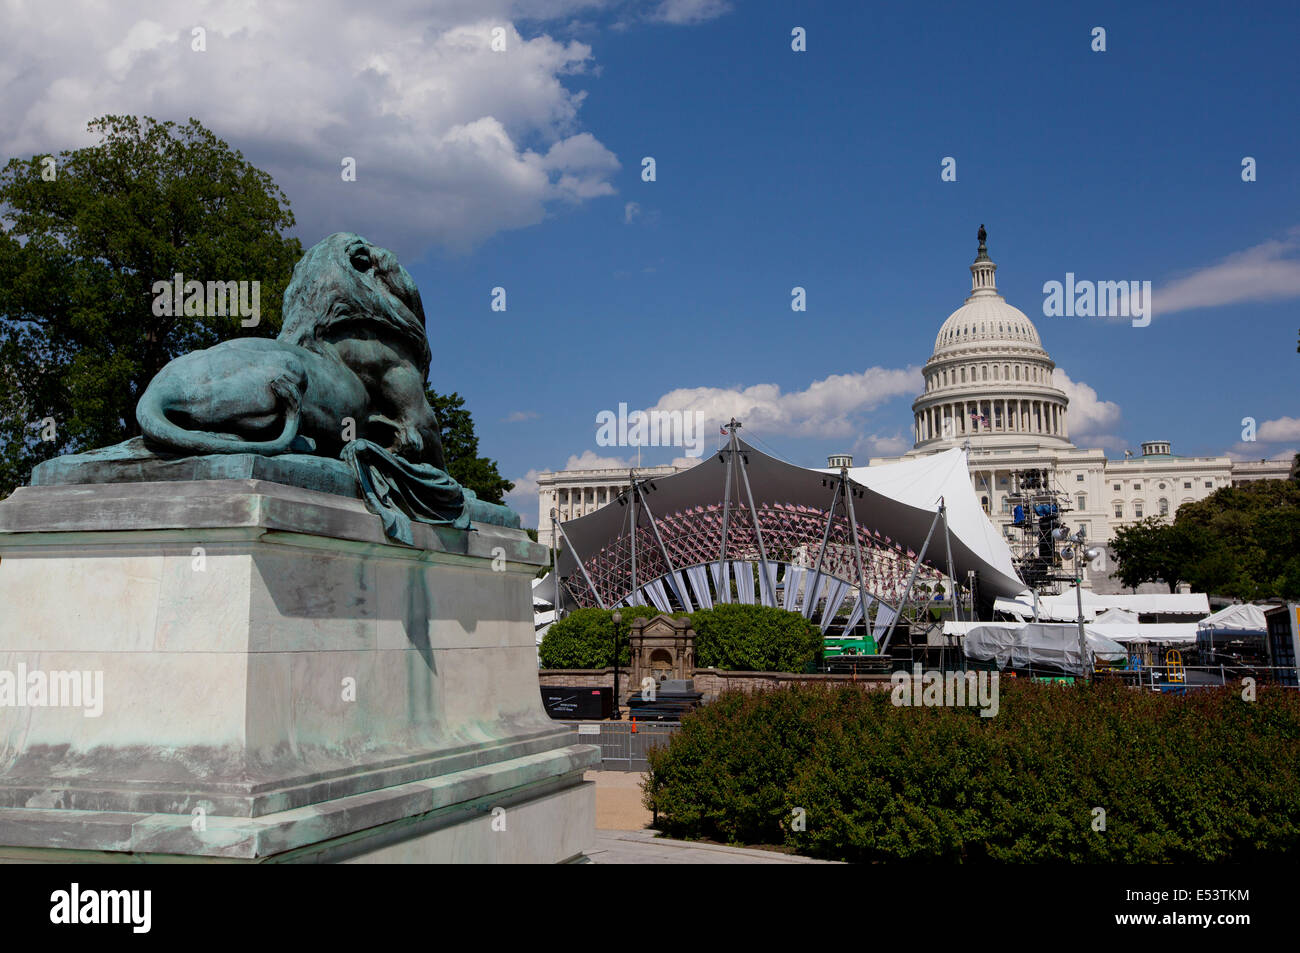 WASHINGTON D.C. - MAY 23 2014: The Ulysses S. Grant Memorial is a presidential memorial in Washington, D.C., honoring American C Stock Photo